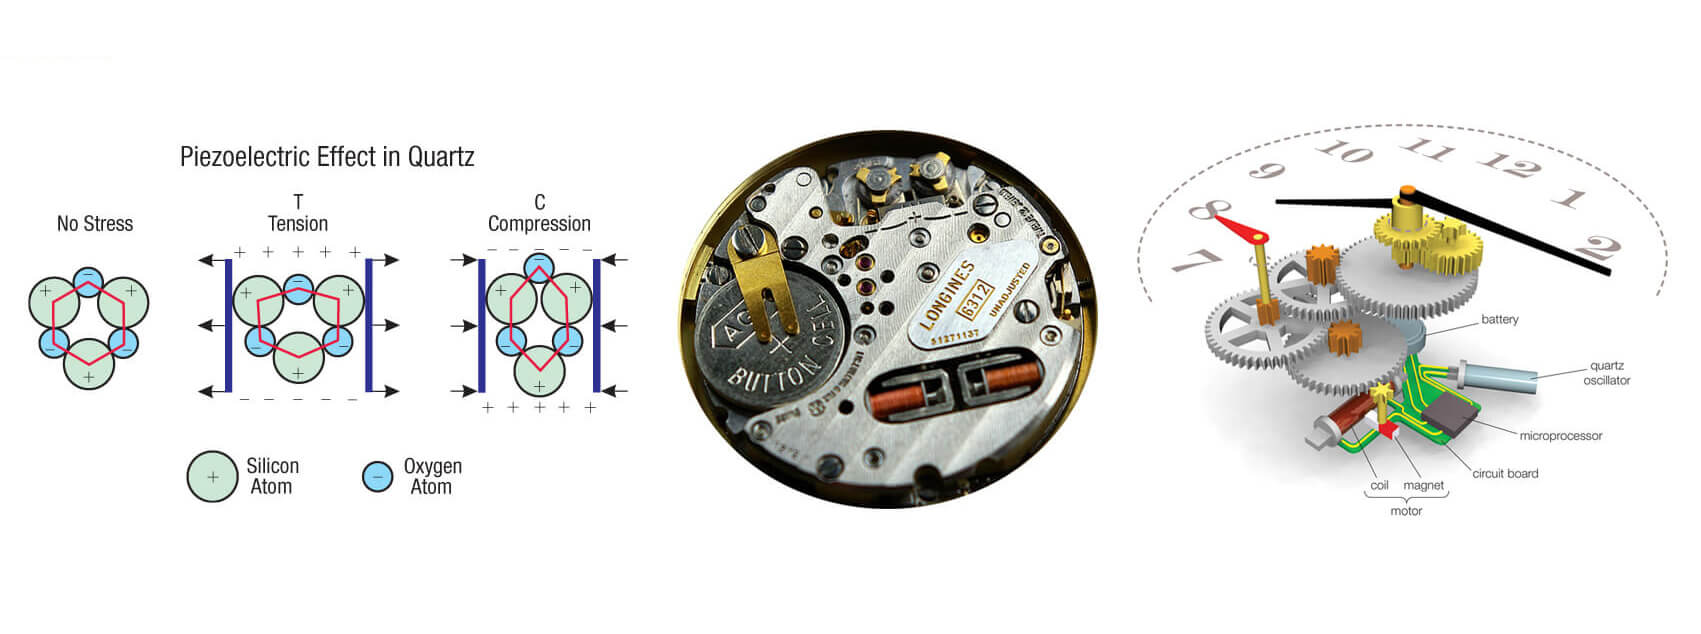 Reloj movimiento rotor imanes-2